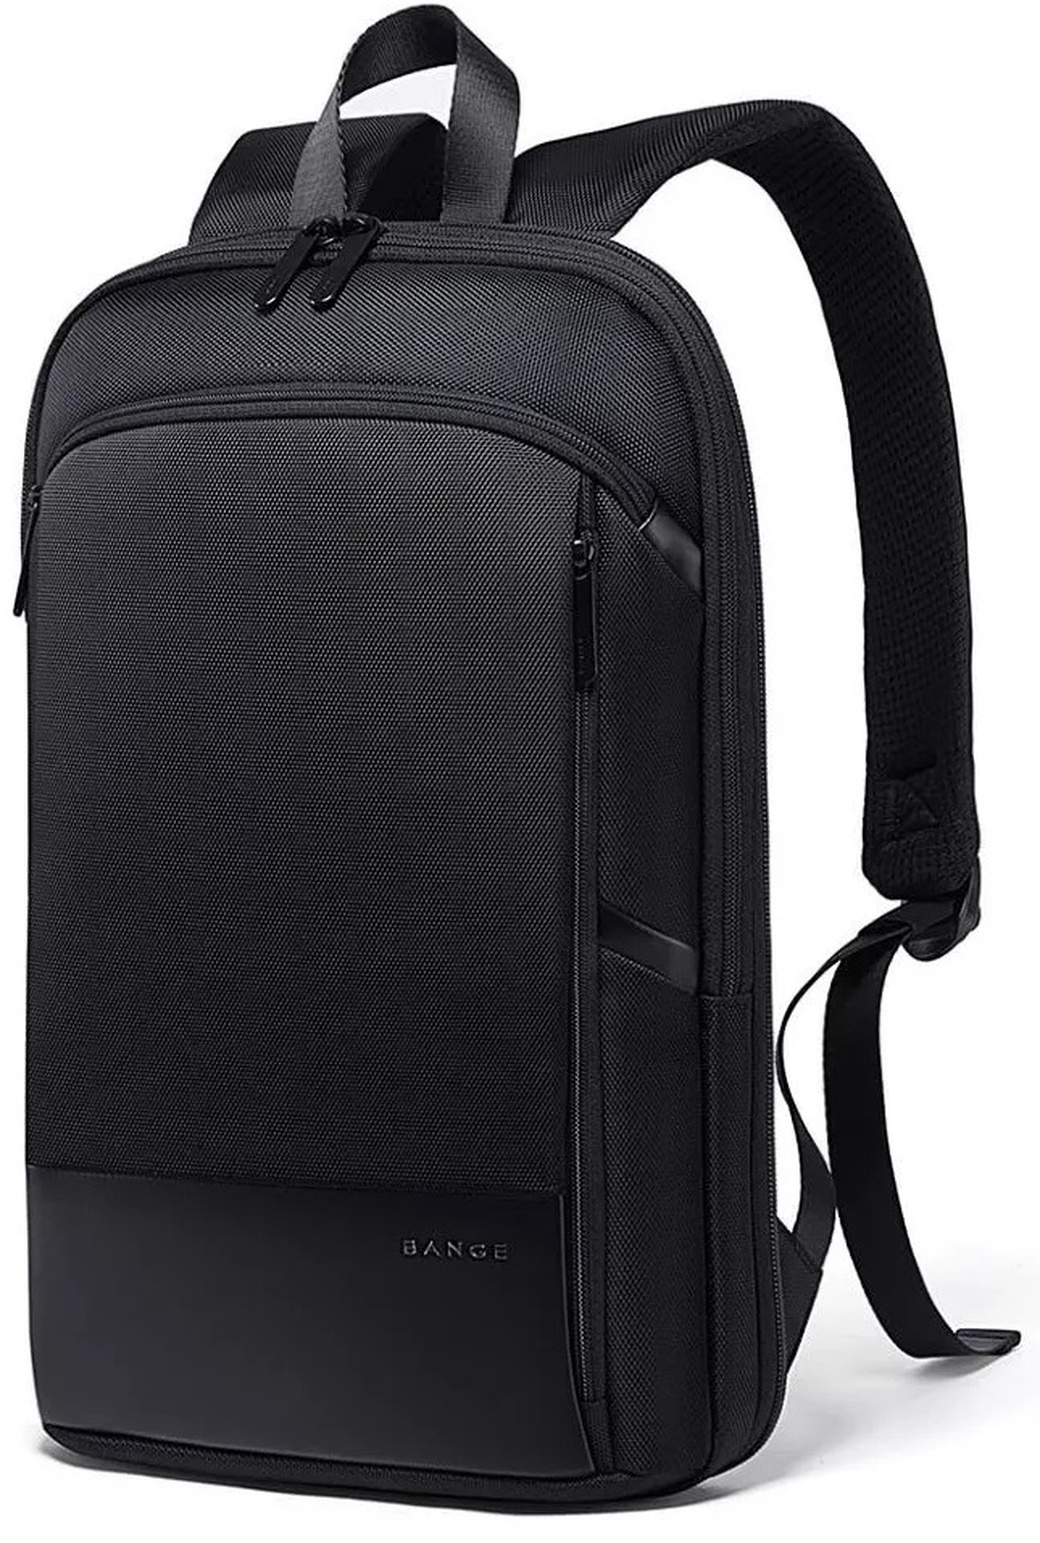 Рюкзак BANGE BG77115, черный, 15.6" фото